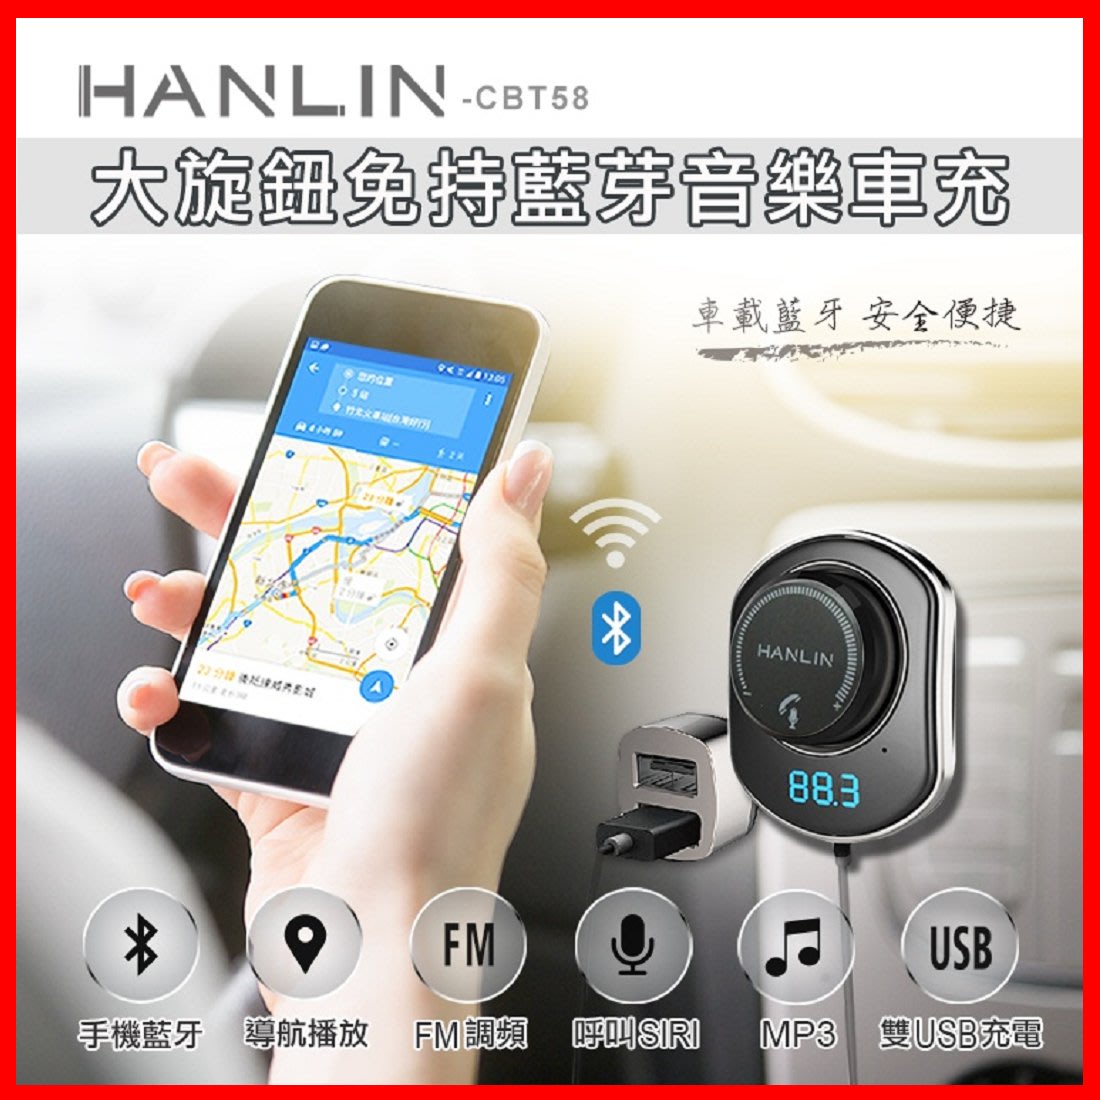 Hanlin Cbt58大旋鈕免持汽車藍芽車充接收器fm發射器mp3音樂轉換器支援siri Line通話 凱益 Yahoo奇摩拍賣